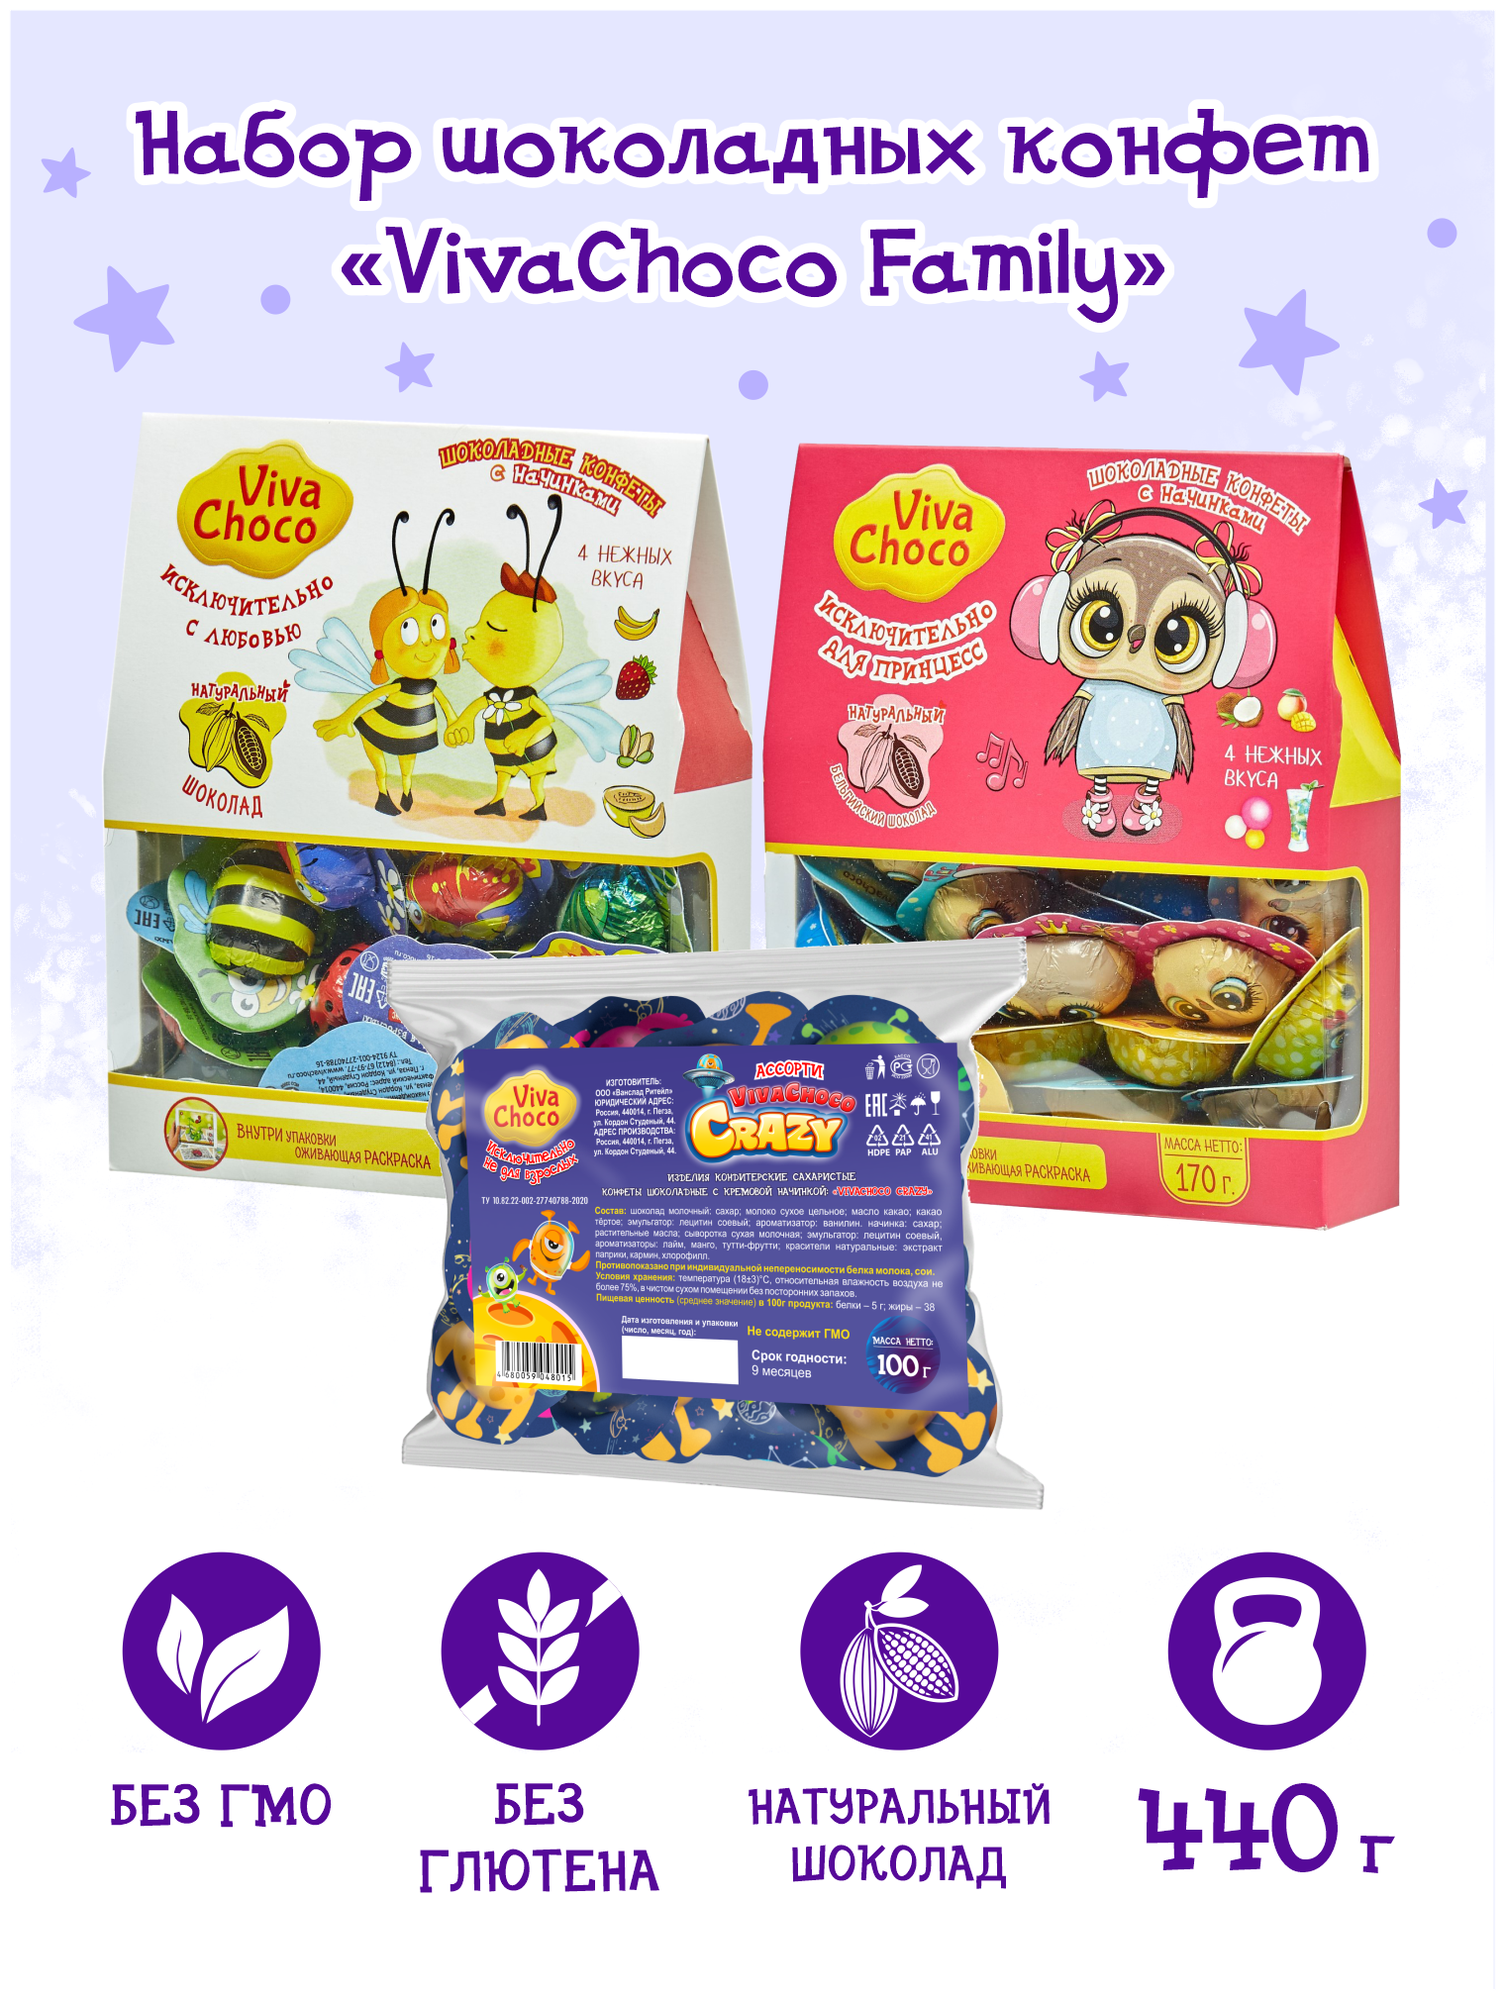 Vivochoco набор конфет ассорти "VivaChoco Family" Happy day 170гр +исключительно для принцесс 170 гр +Crazy100 гр - фотография № 1